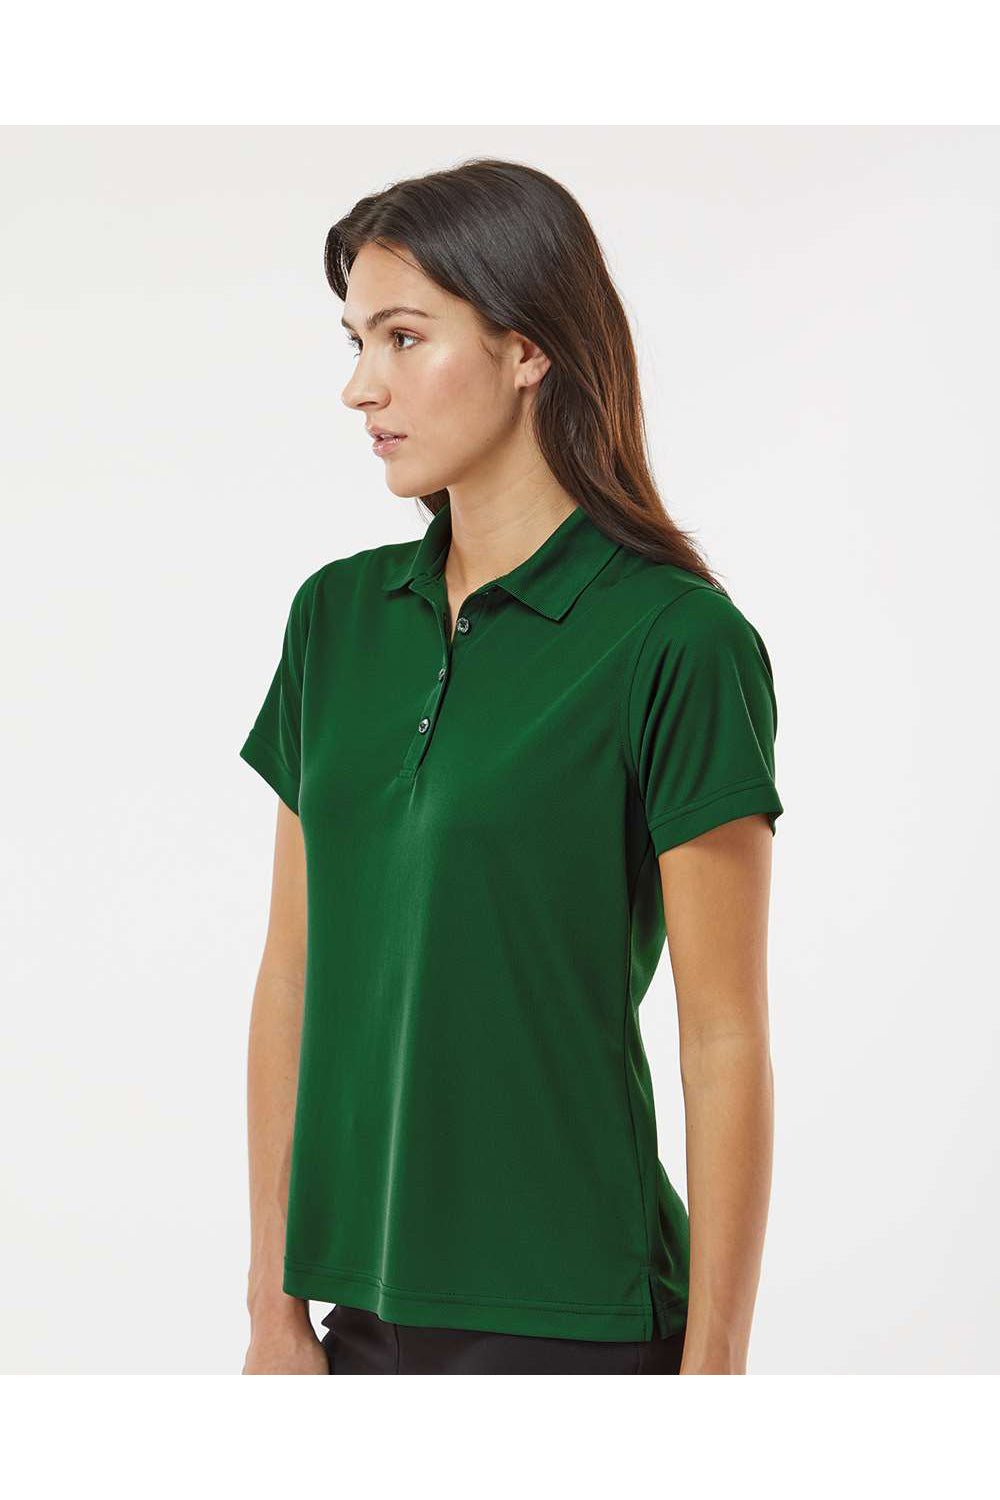 Paragon 104 Womens Saratoga Performance Mini Mesh Short Sleeve Polo Shirt Hunter Green Model Side